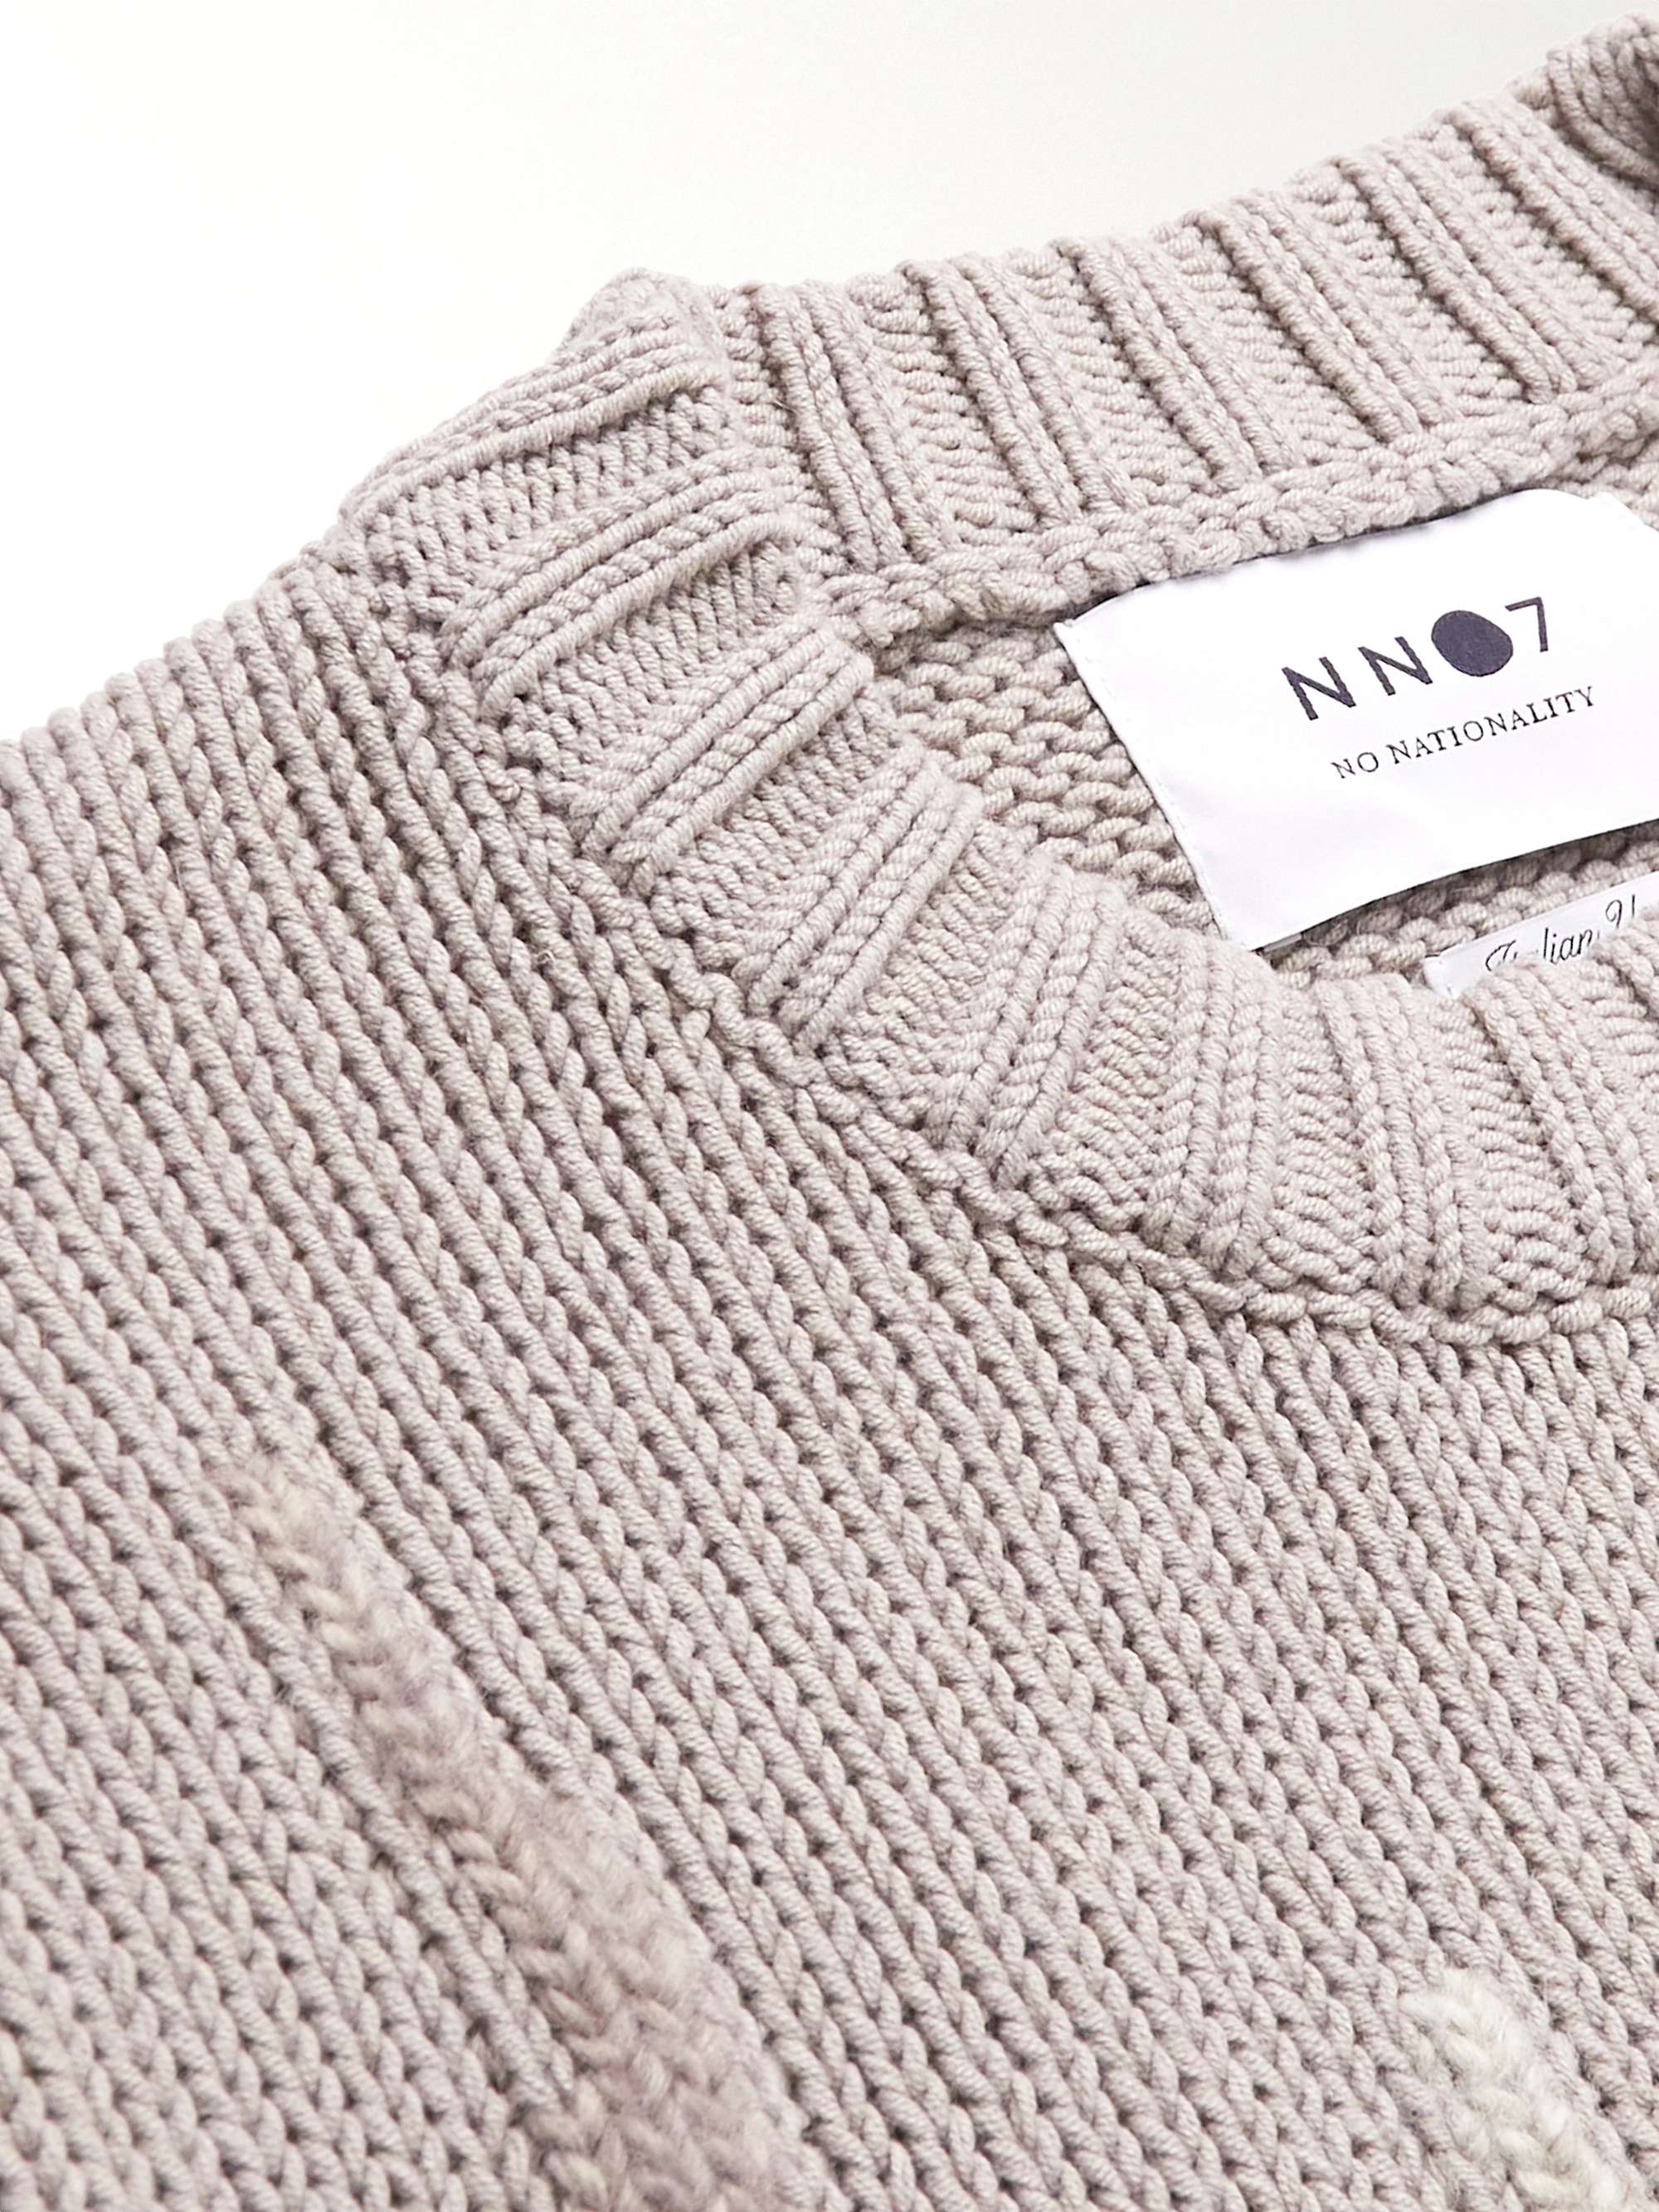 NN07 Rick Striped Intarsia Cotton-Blend Sweater